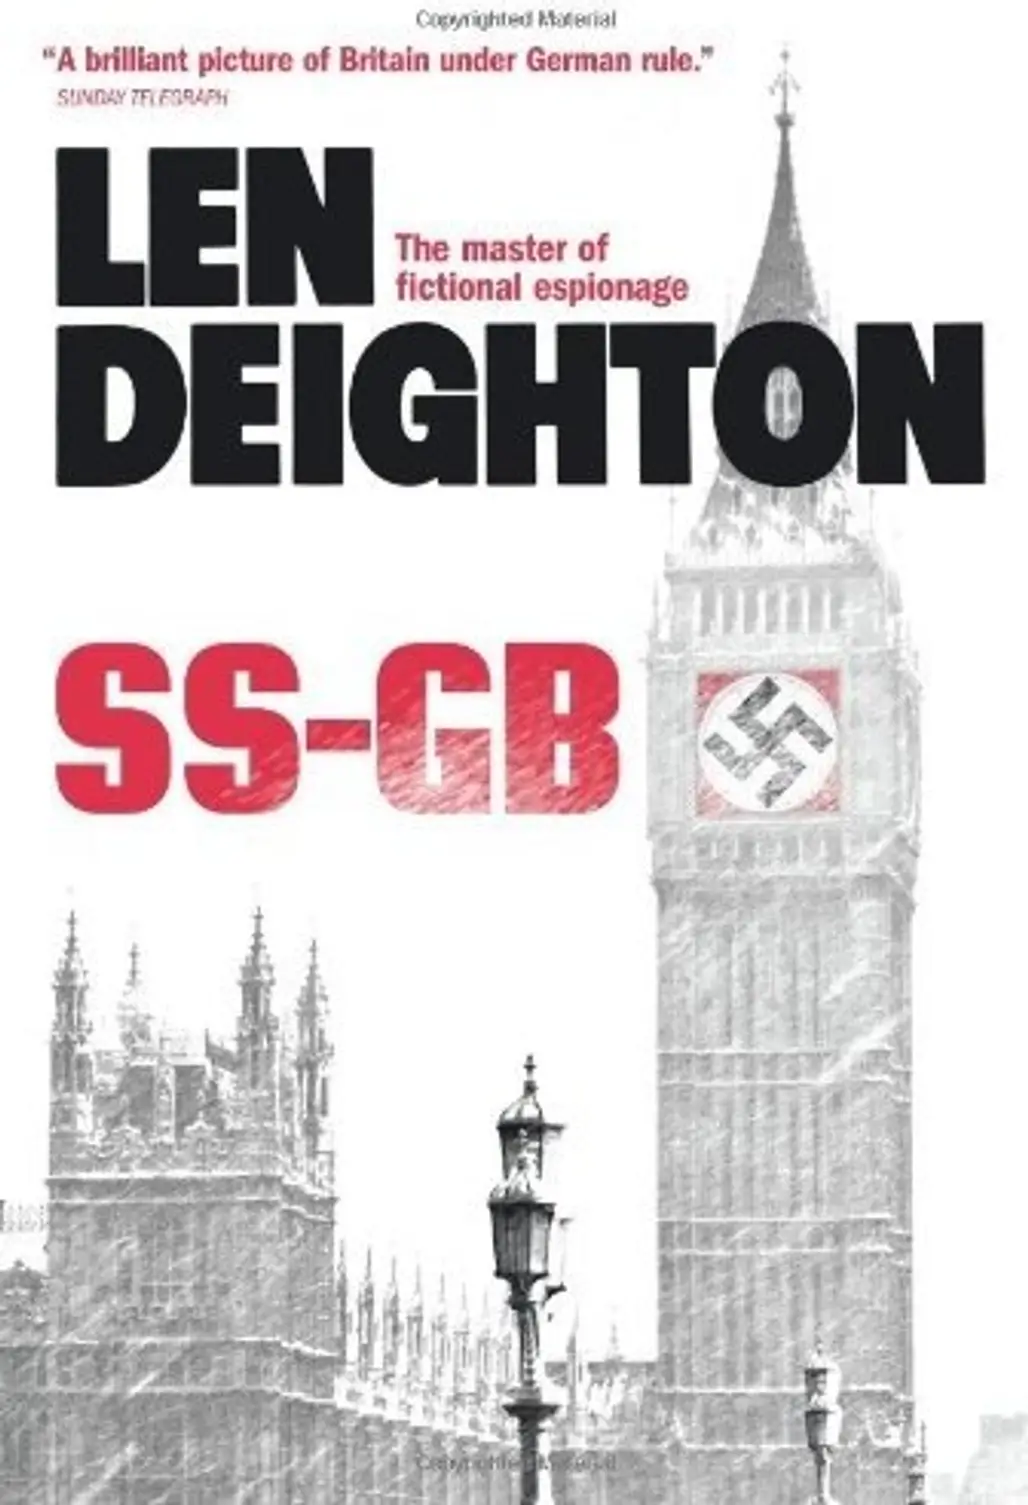 SS-GB (Len Deighton)